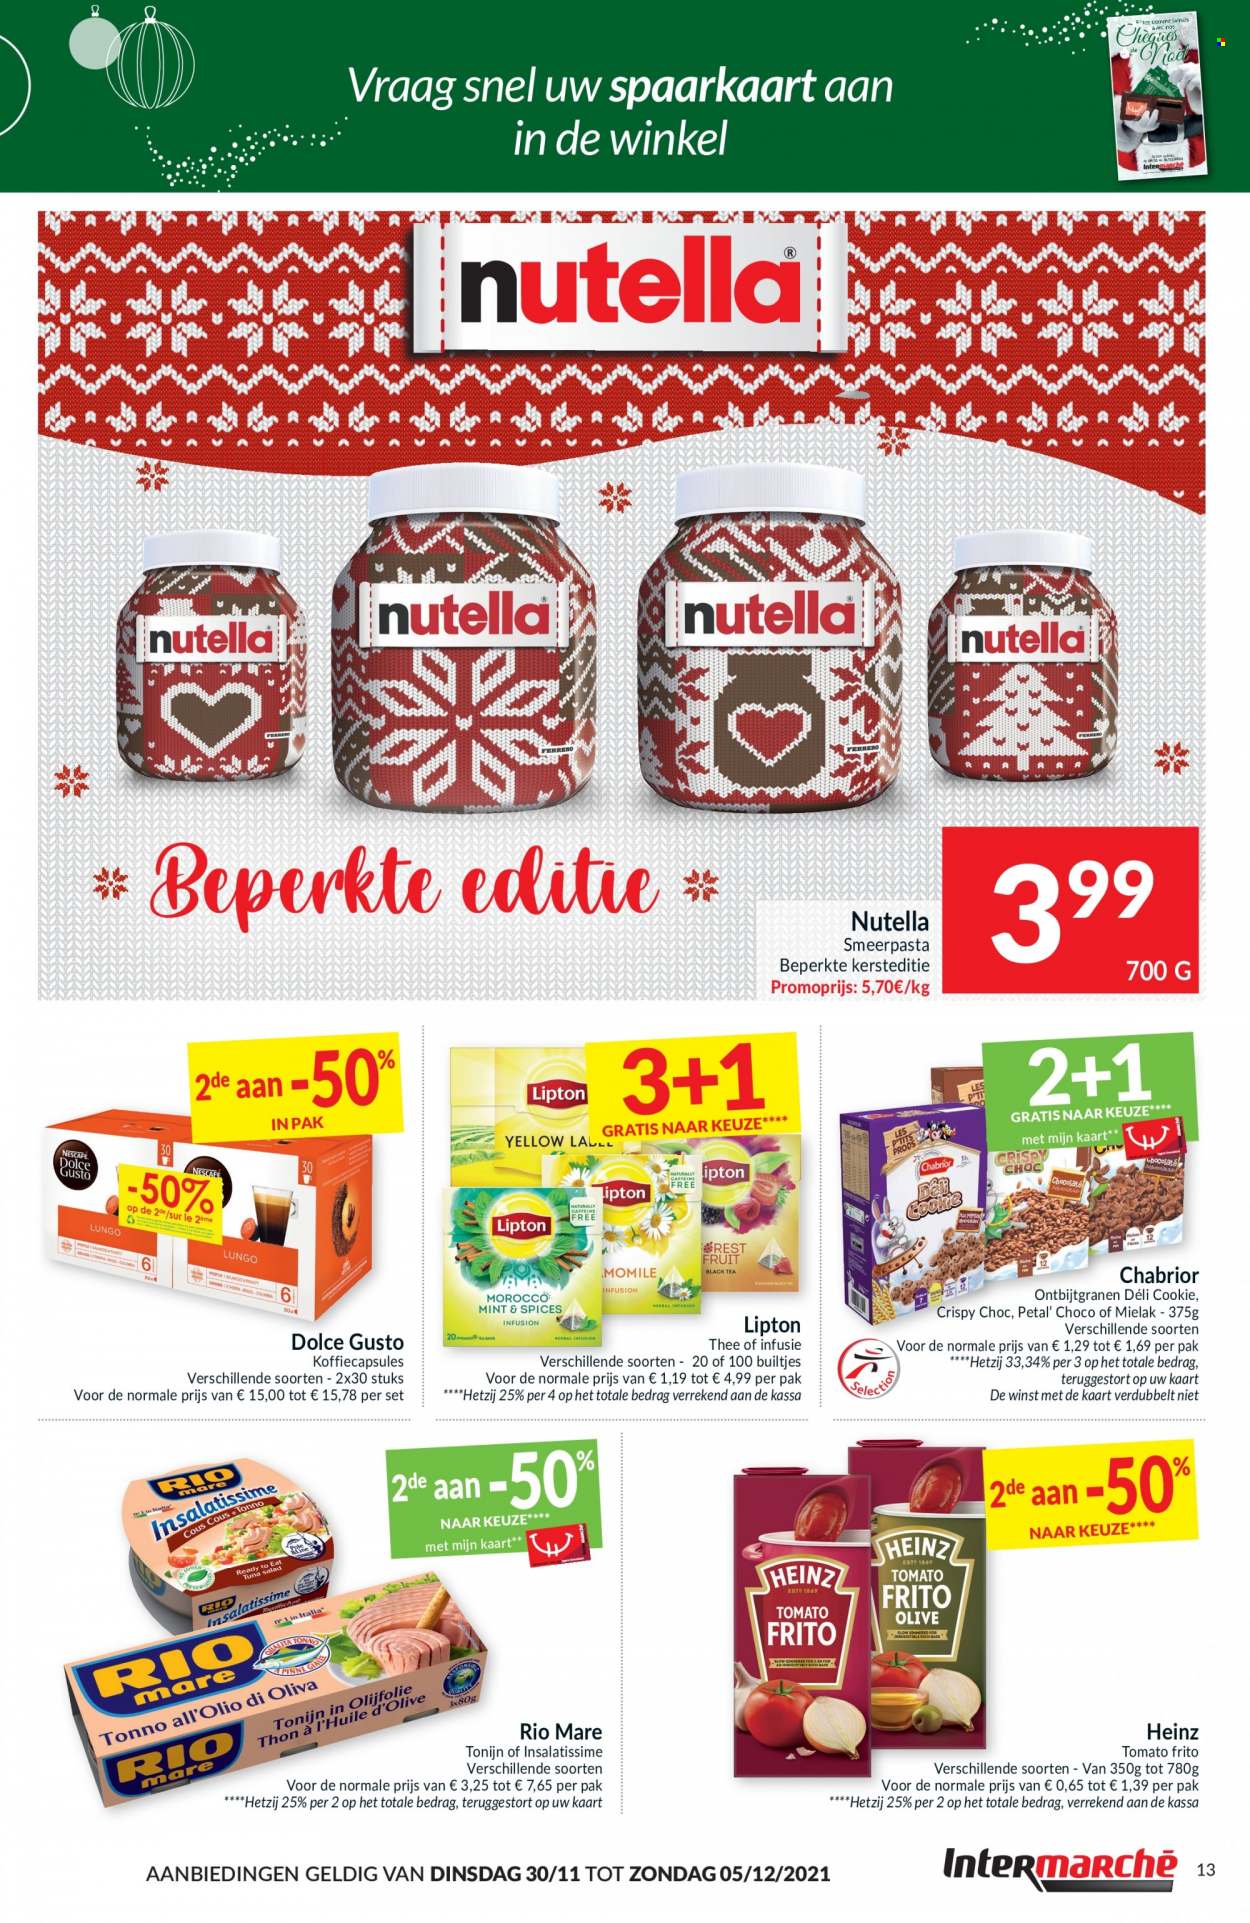 thumbnail - Intermarché-aanbieding - 30/11/2021 - 05/12/2021 -  producten in de aanbieding - Rio Mare, tonijn, Nutella, Heinz, tomato frito, Lipton, Dolce Gusto, Fa. Pagina 13.